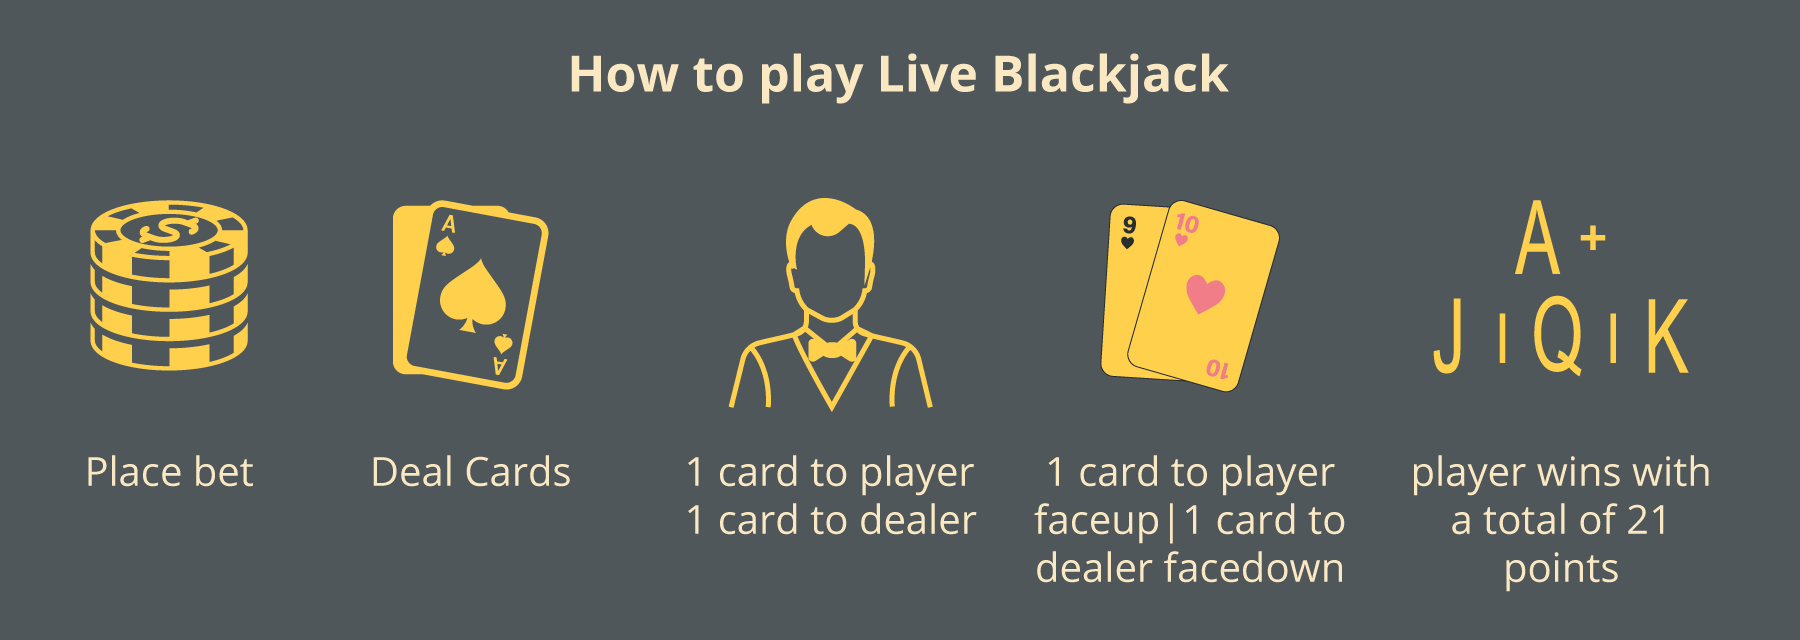 how to play live blackjack online - Emirates Casino Blackjack Guide
